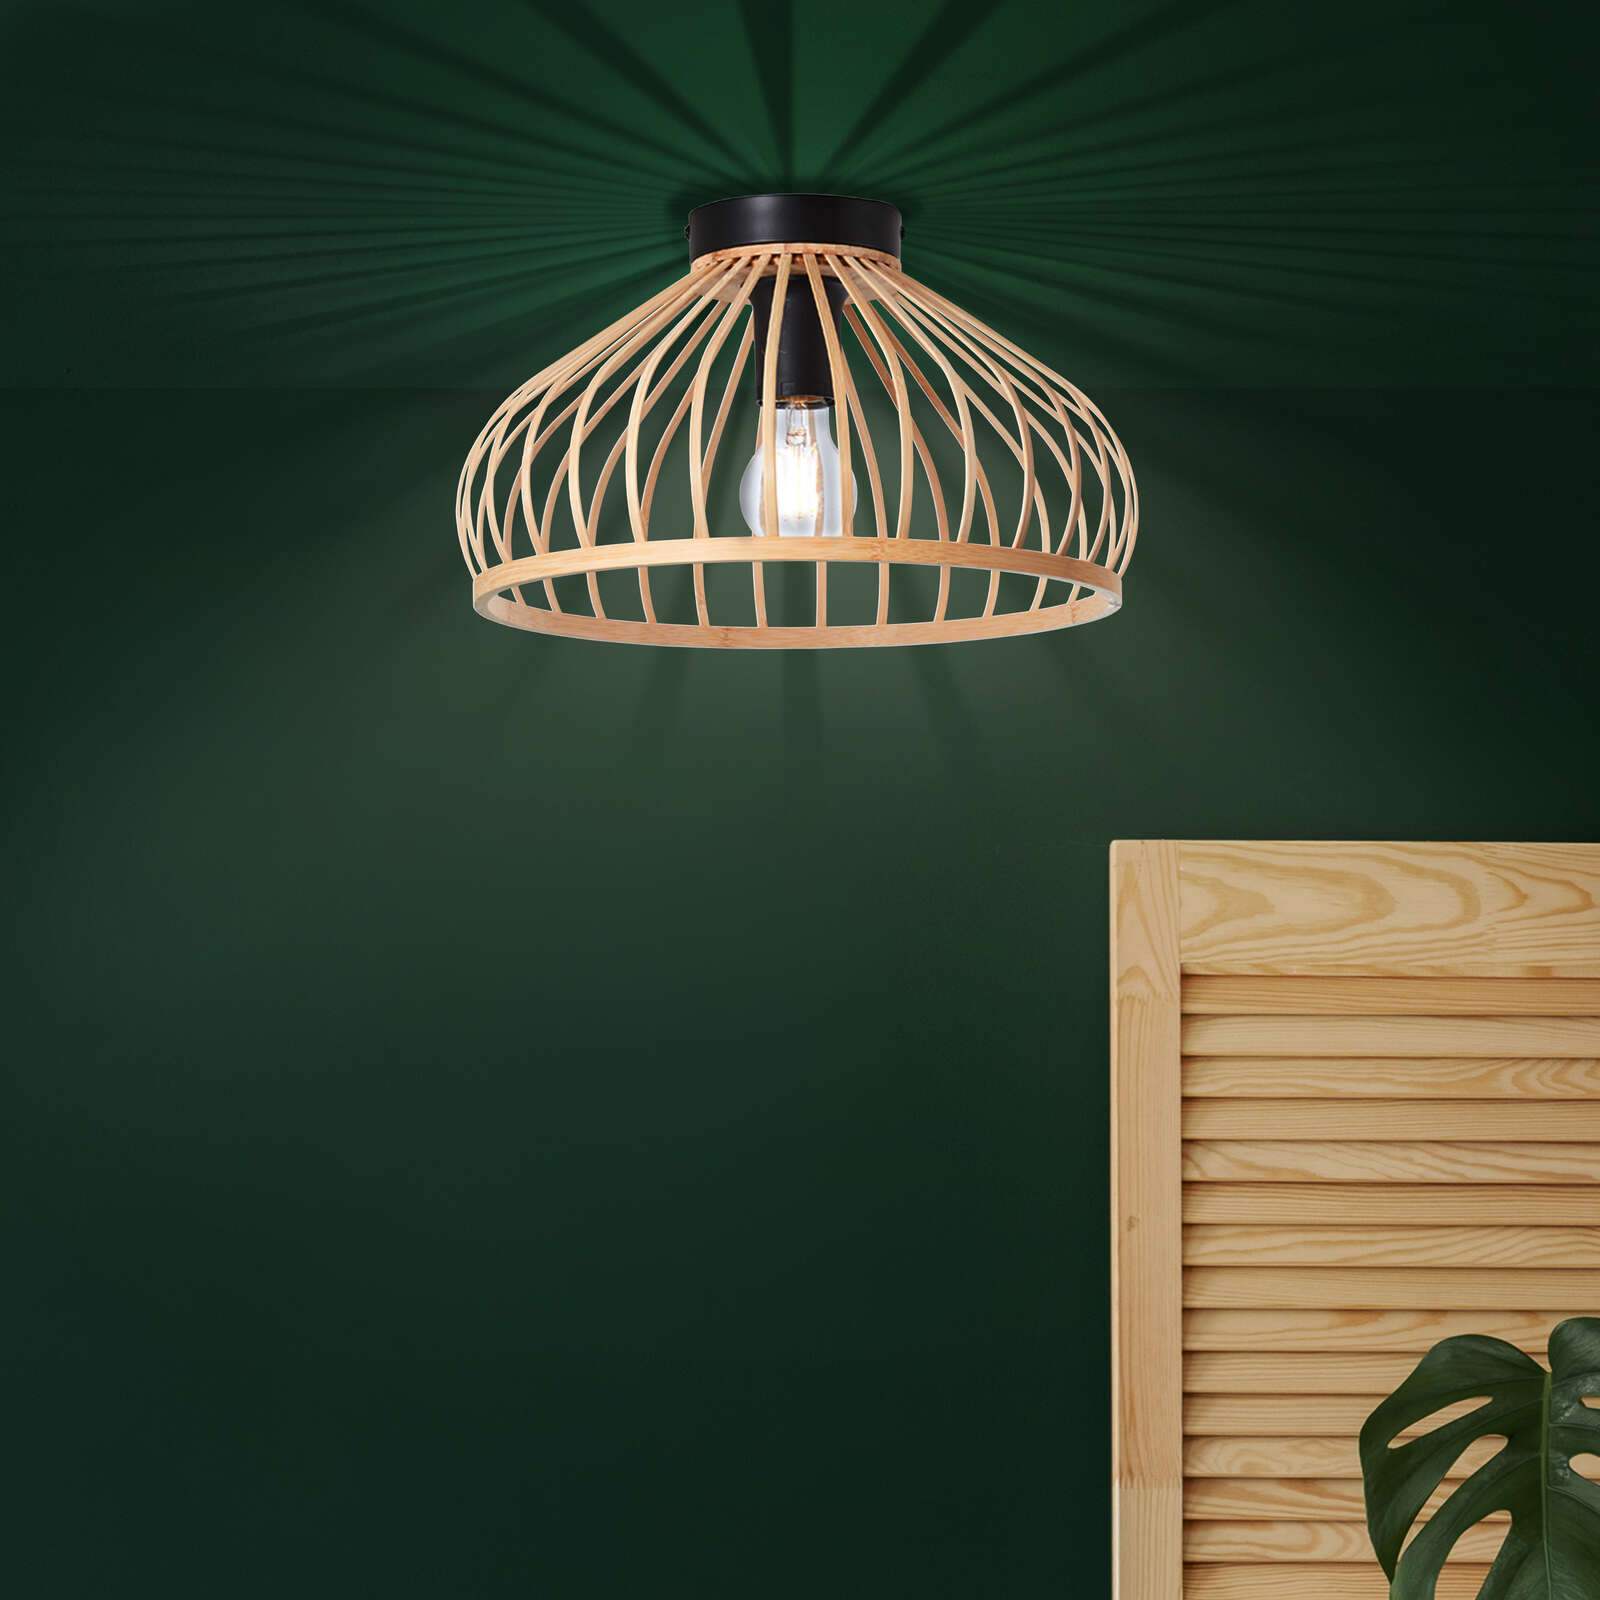             Bamboo ceiling light - Luisa 2 - Brown
        